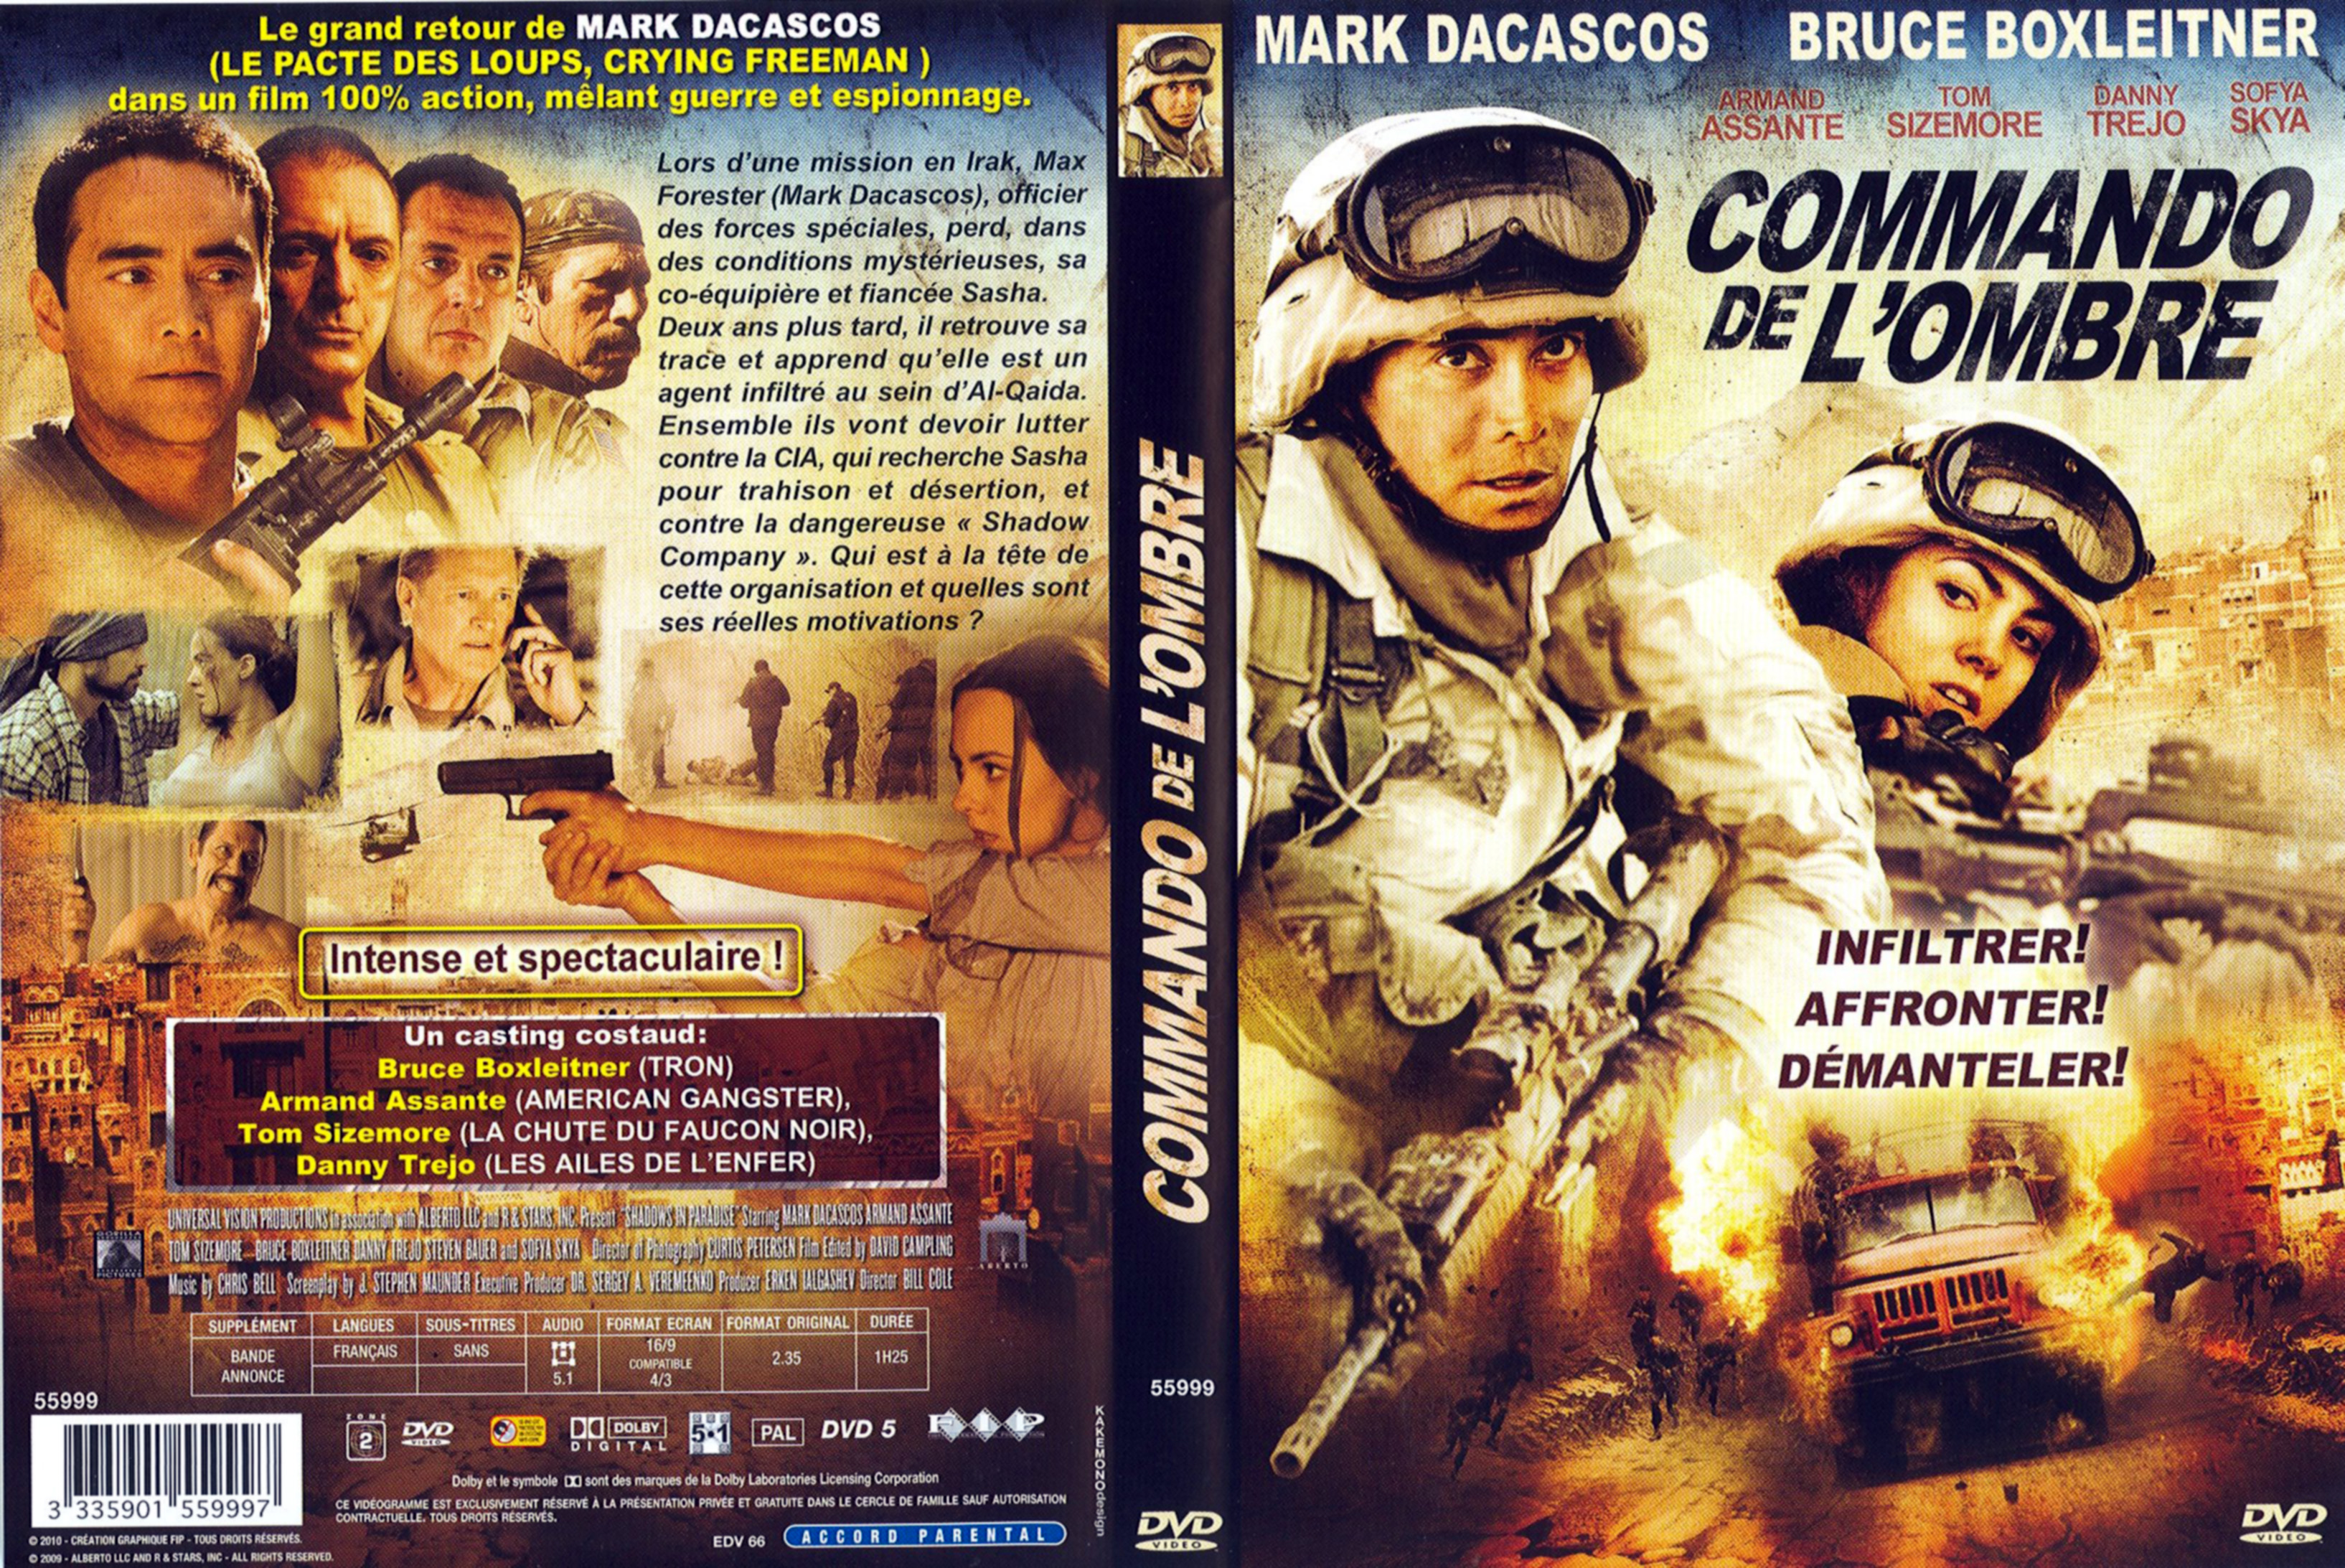 Jaquette DVD Commando de l